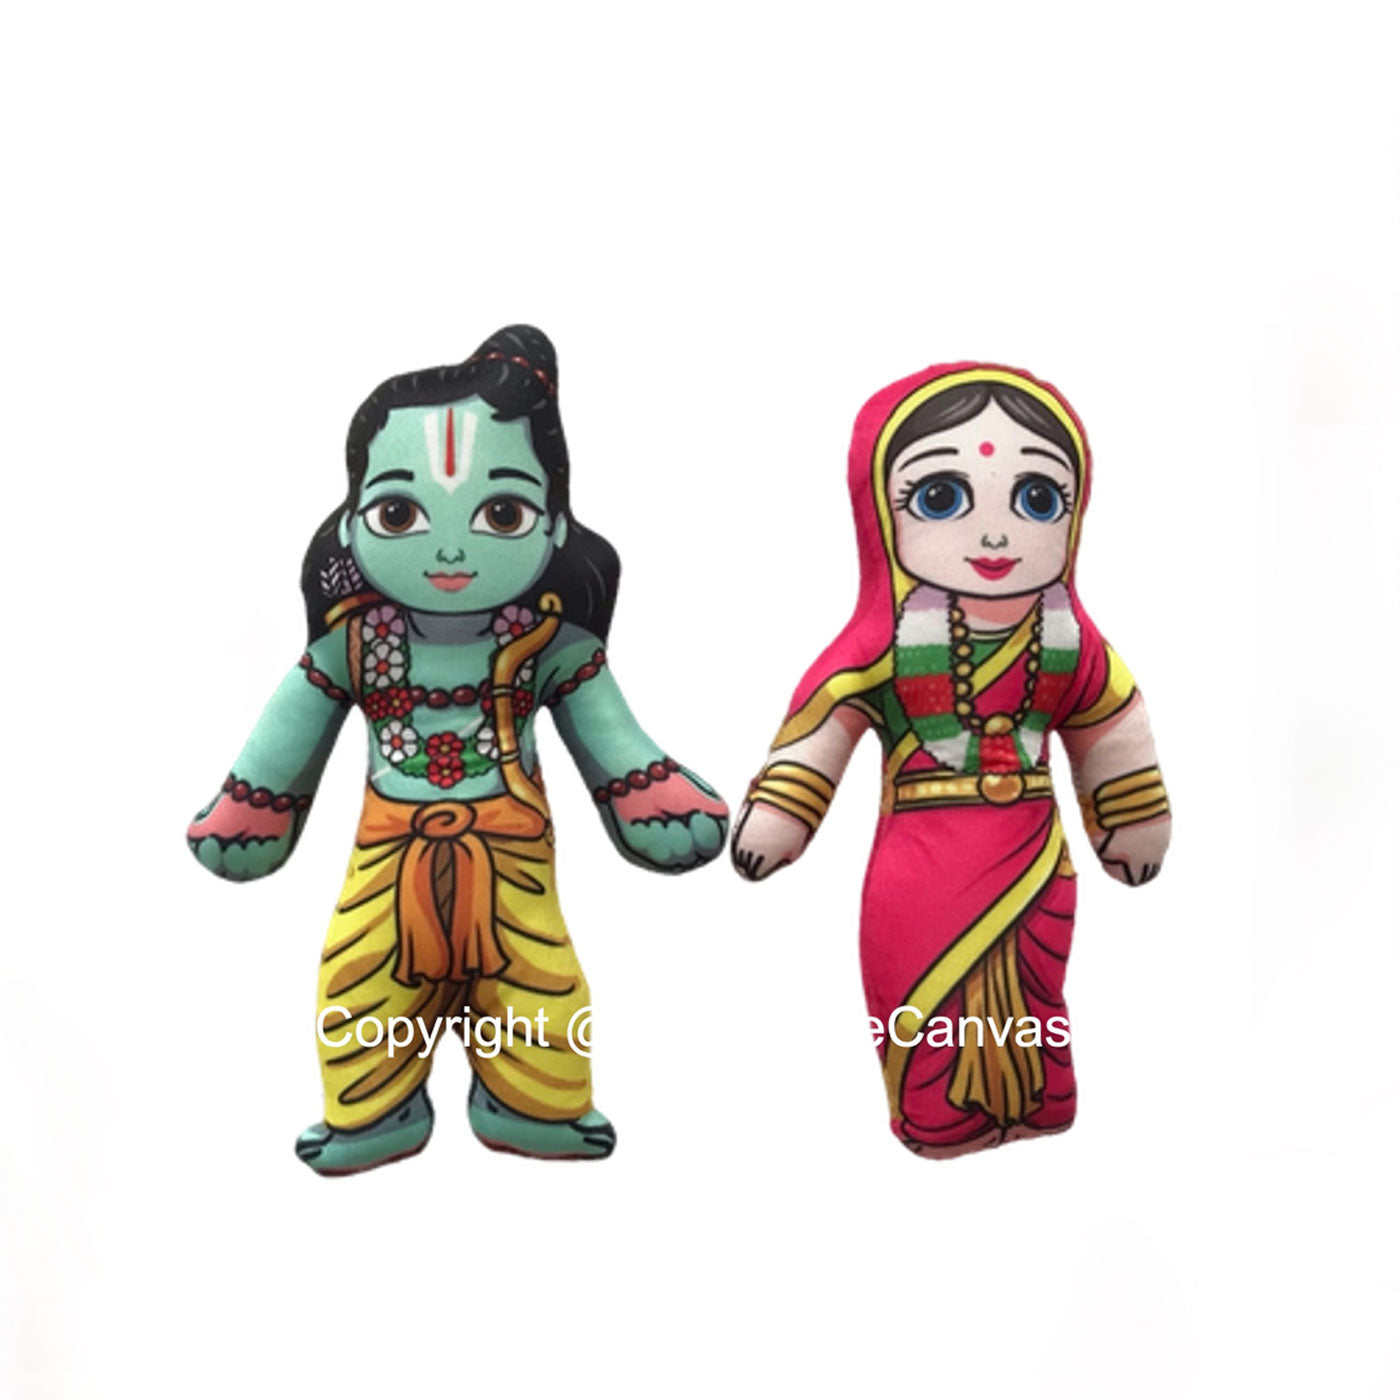 Lord Ram and Goddess Sita Plush Dolls